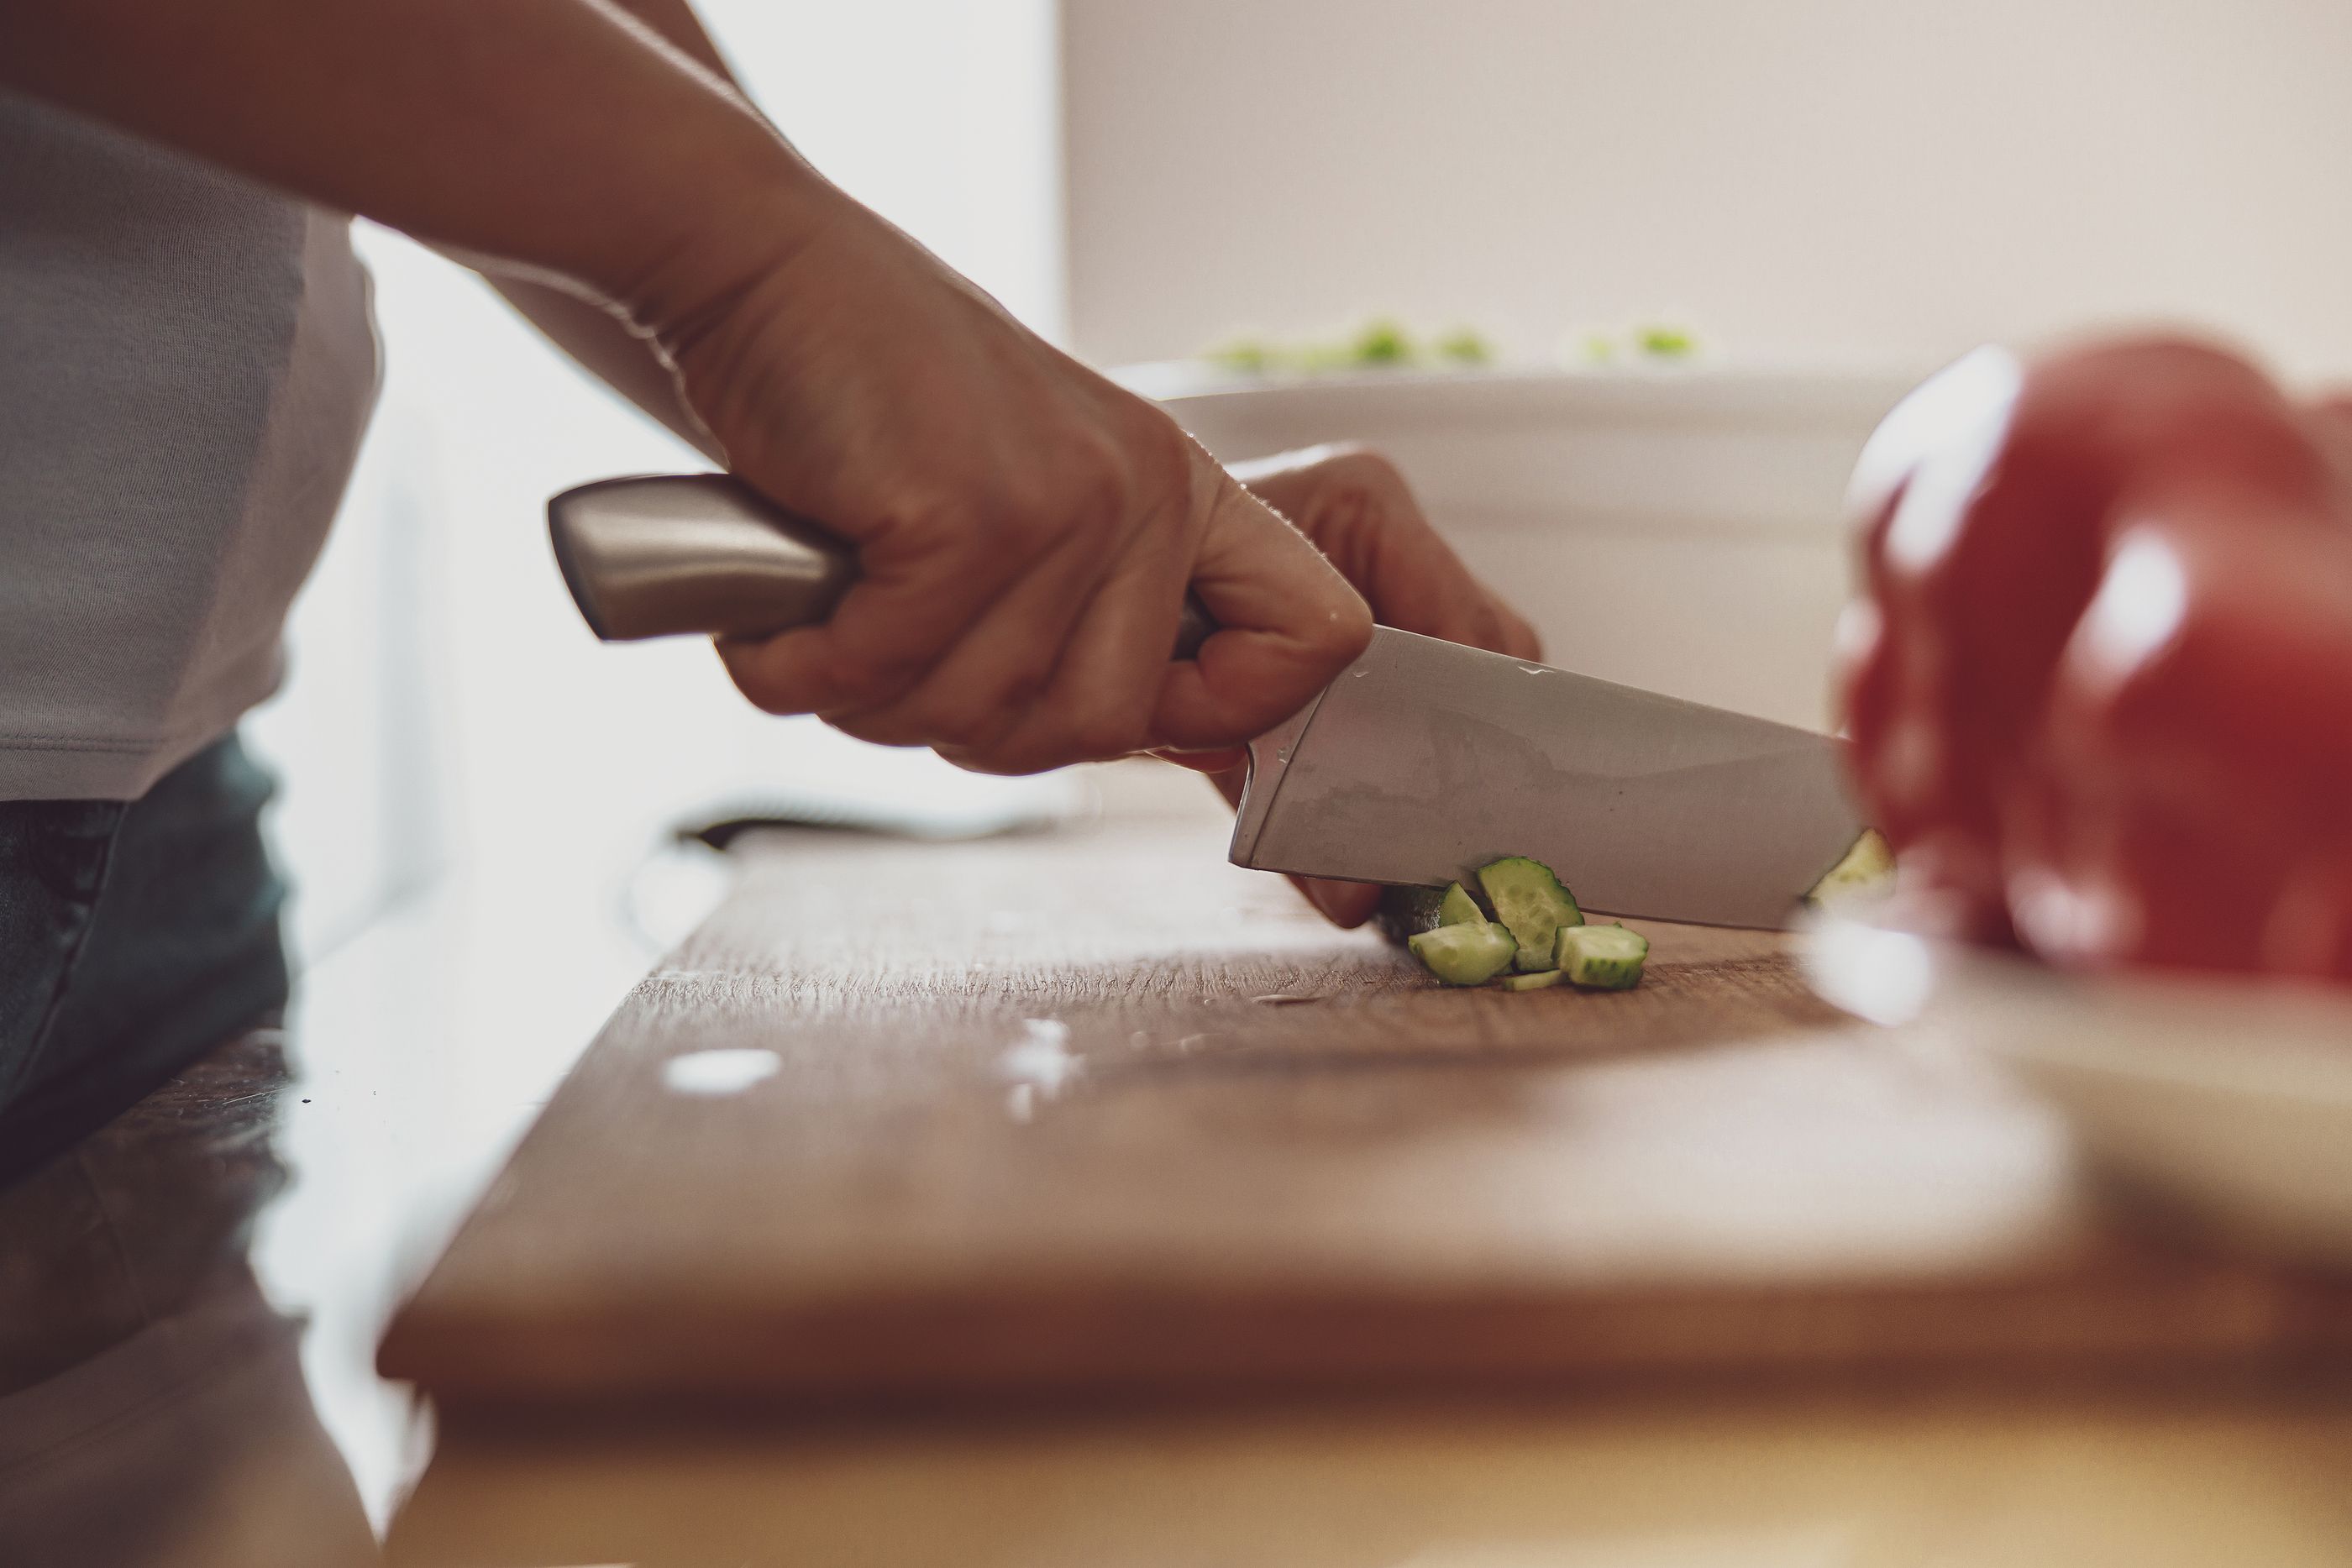 9 técnicas básicas para cortar verduras que todo cocinero debería sabe